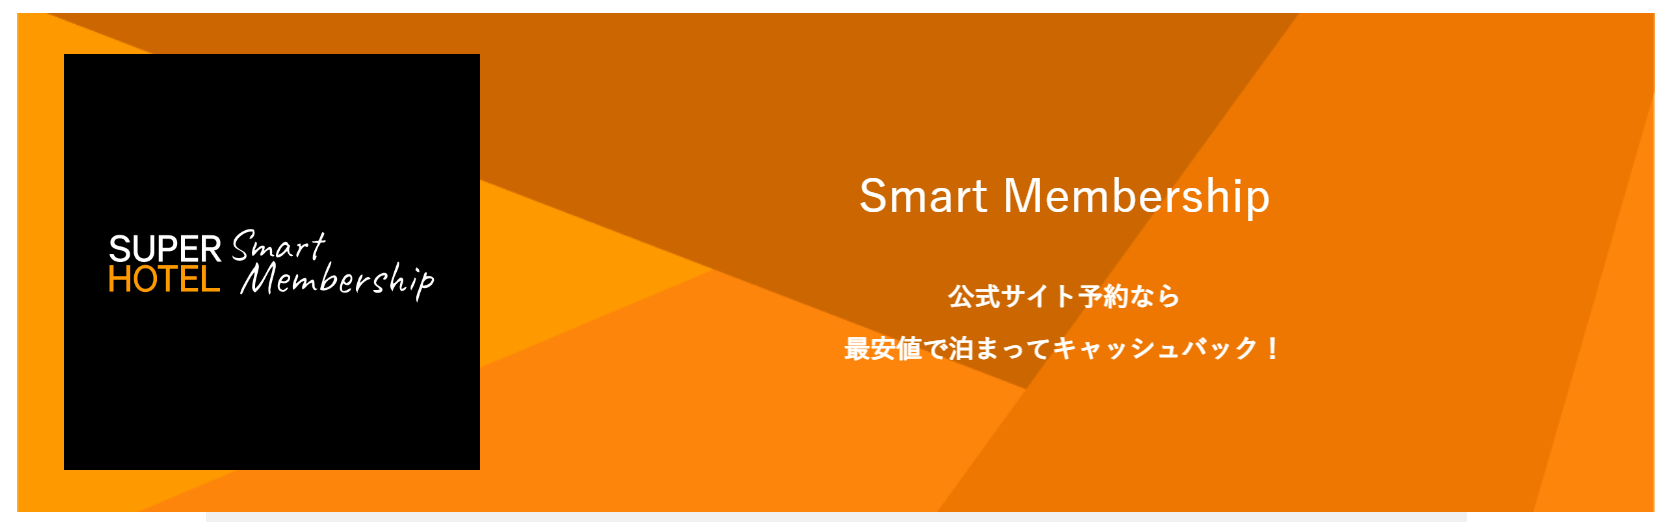 uSmart Membershipv